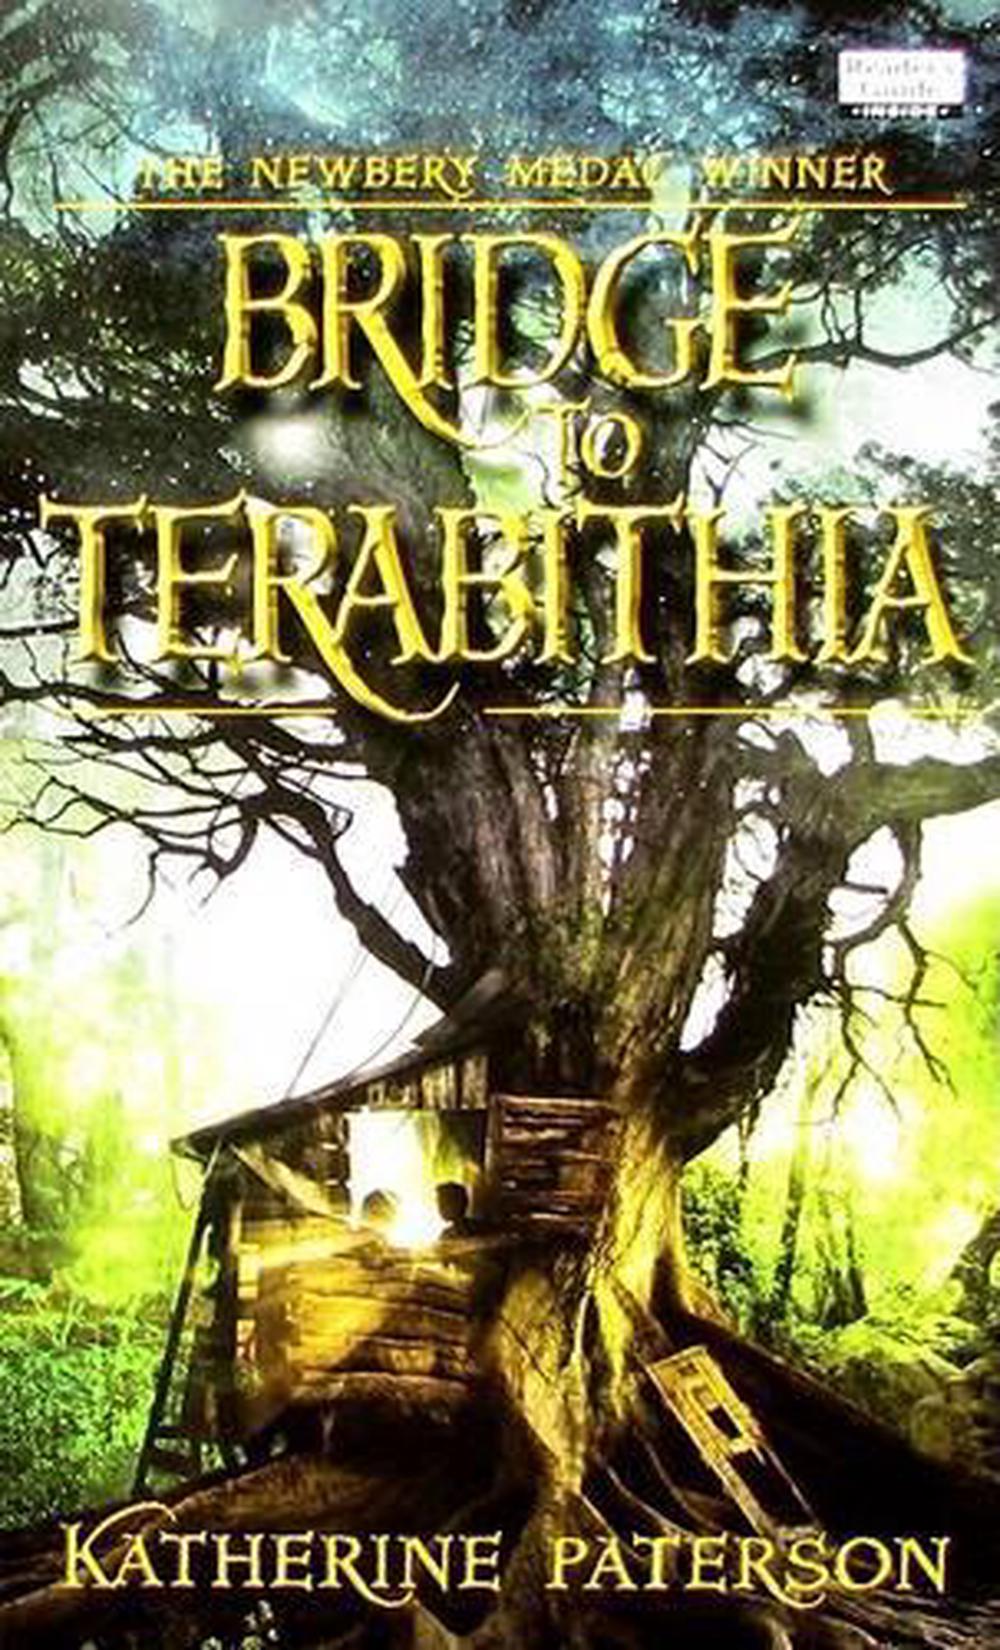 book review for bridge to terabithia